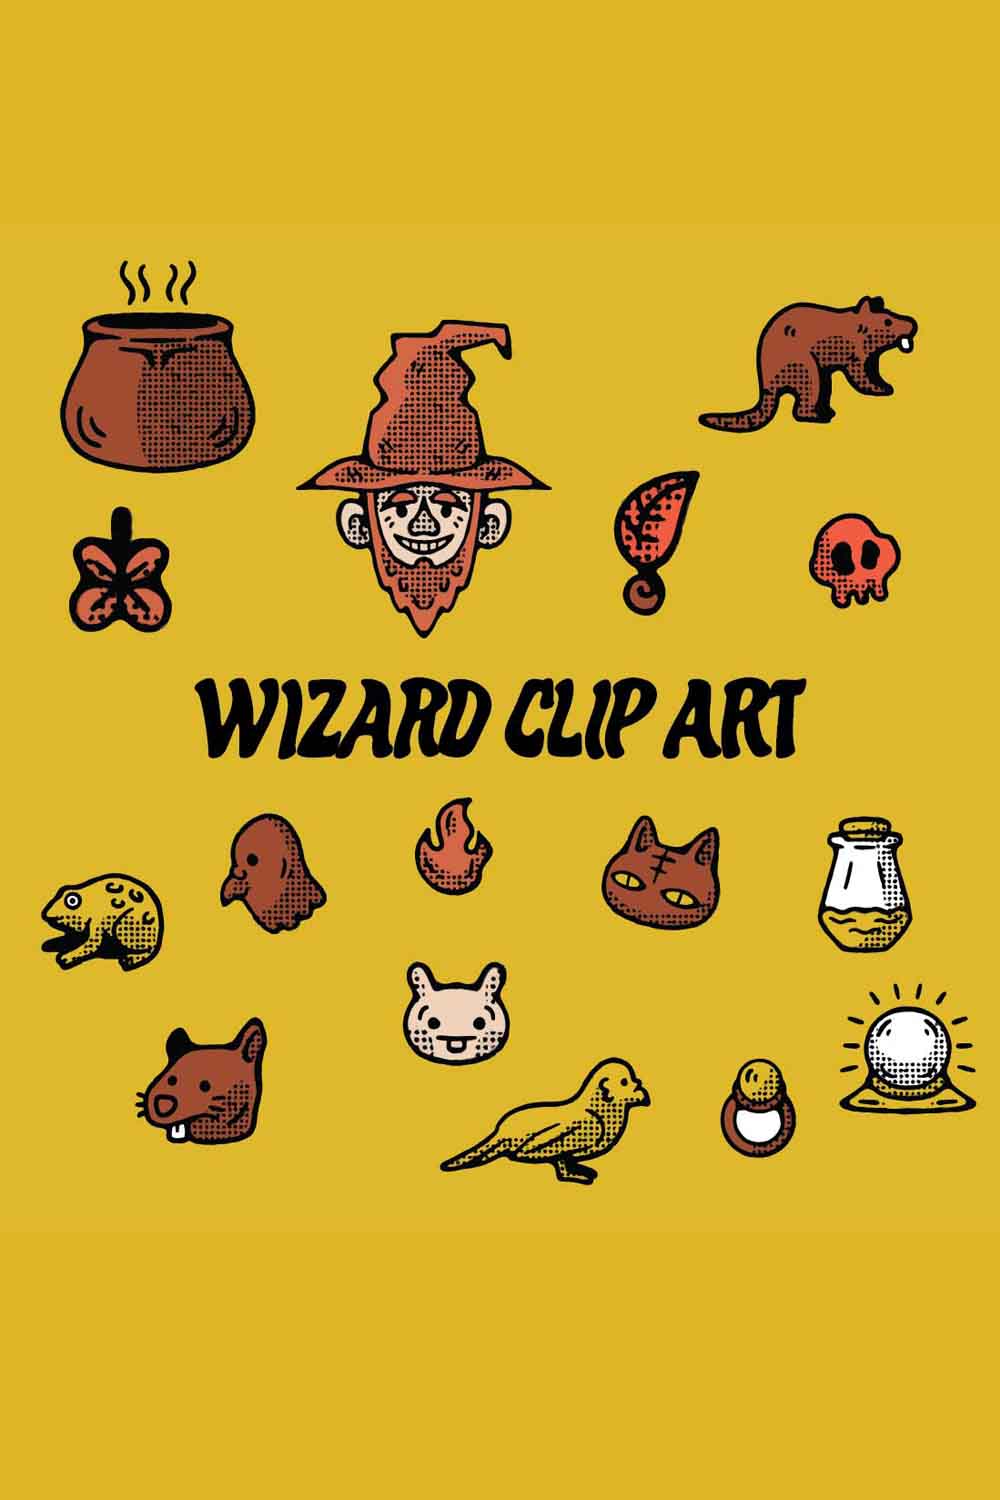 Wizard Doodles Clip Art Pinterest Image.